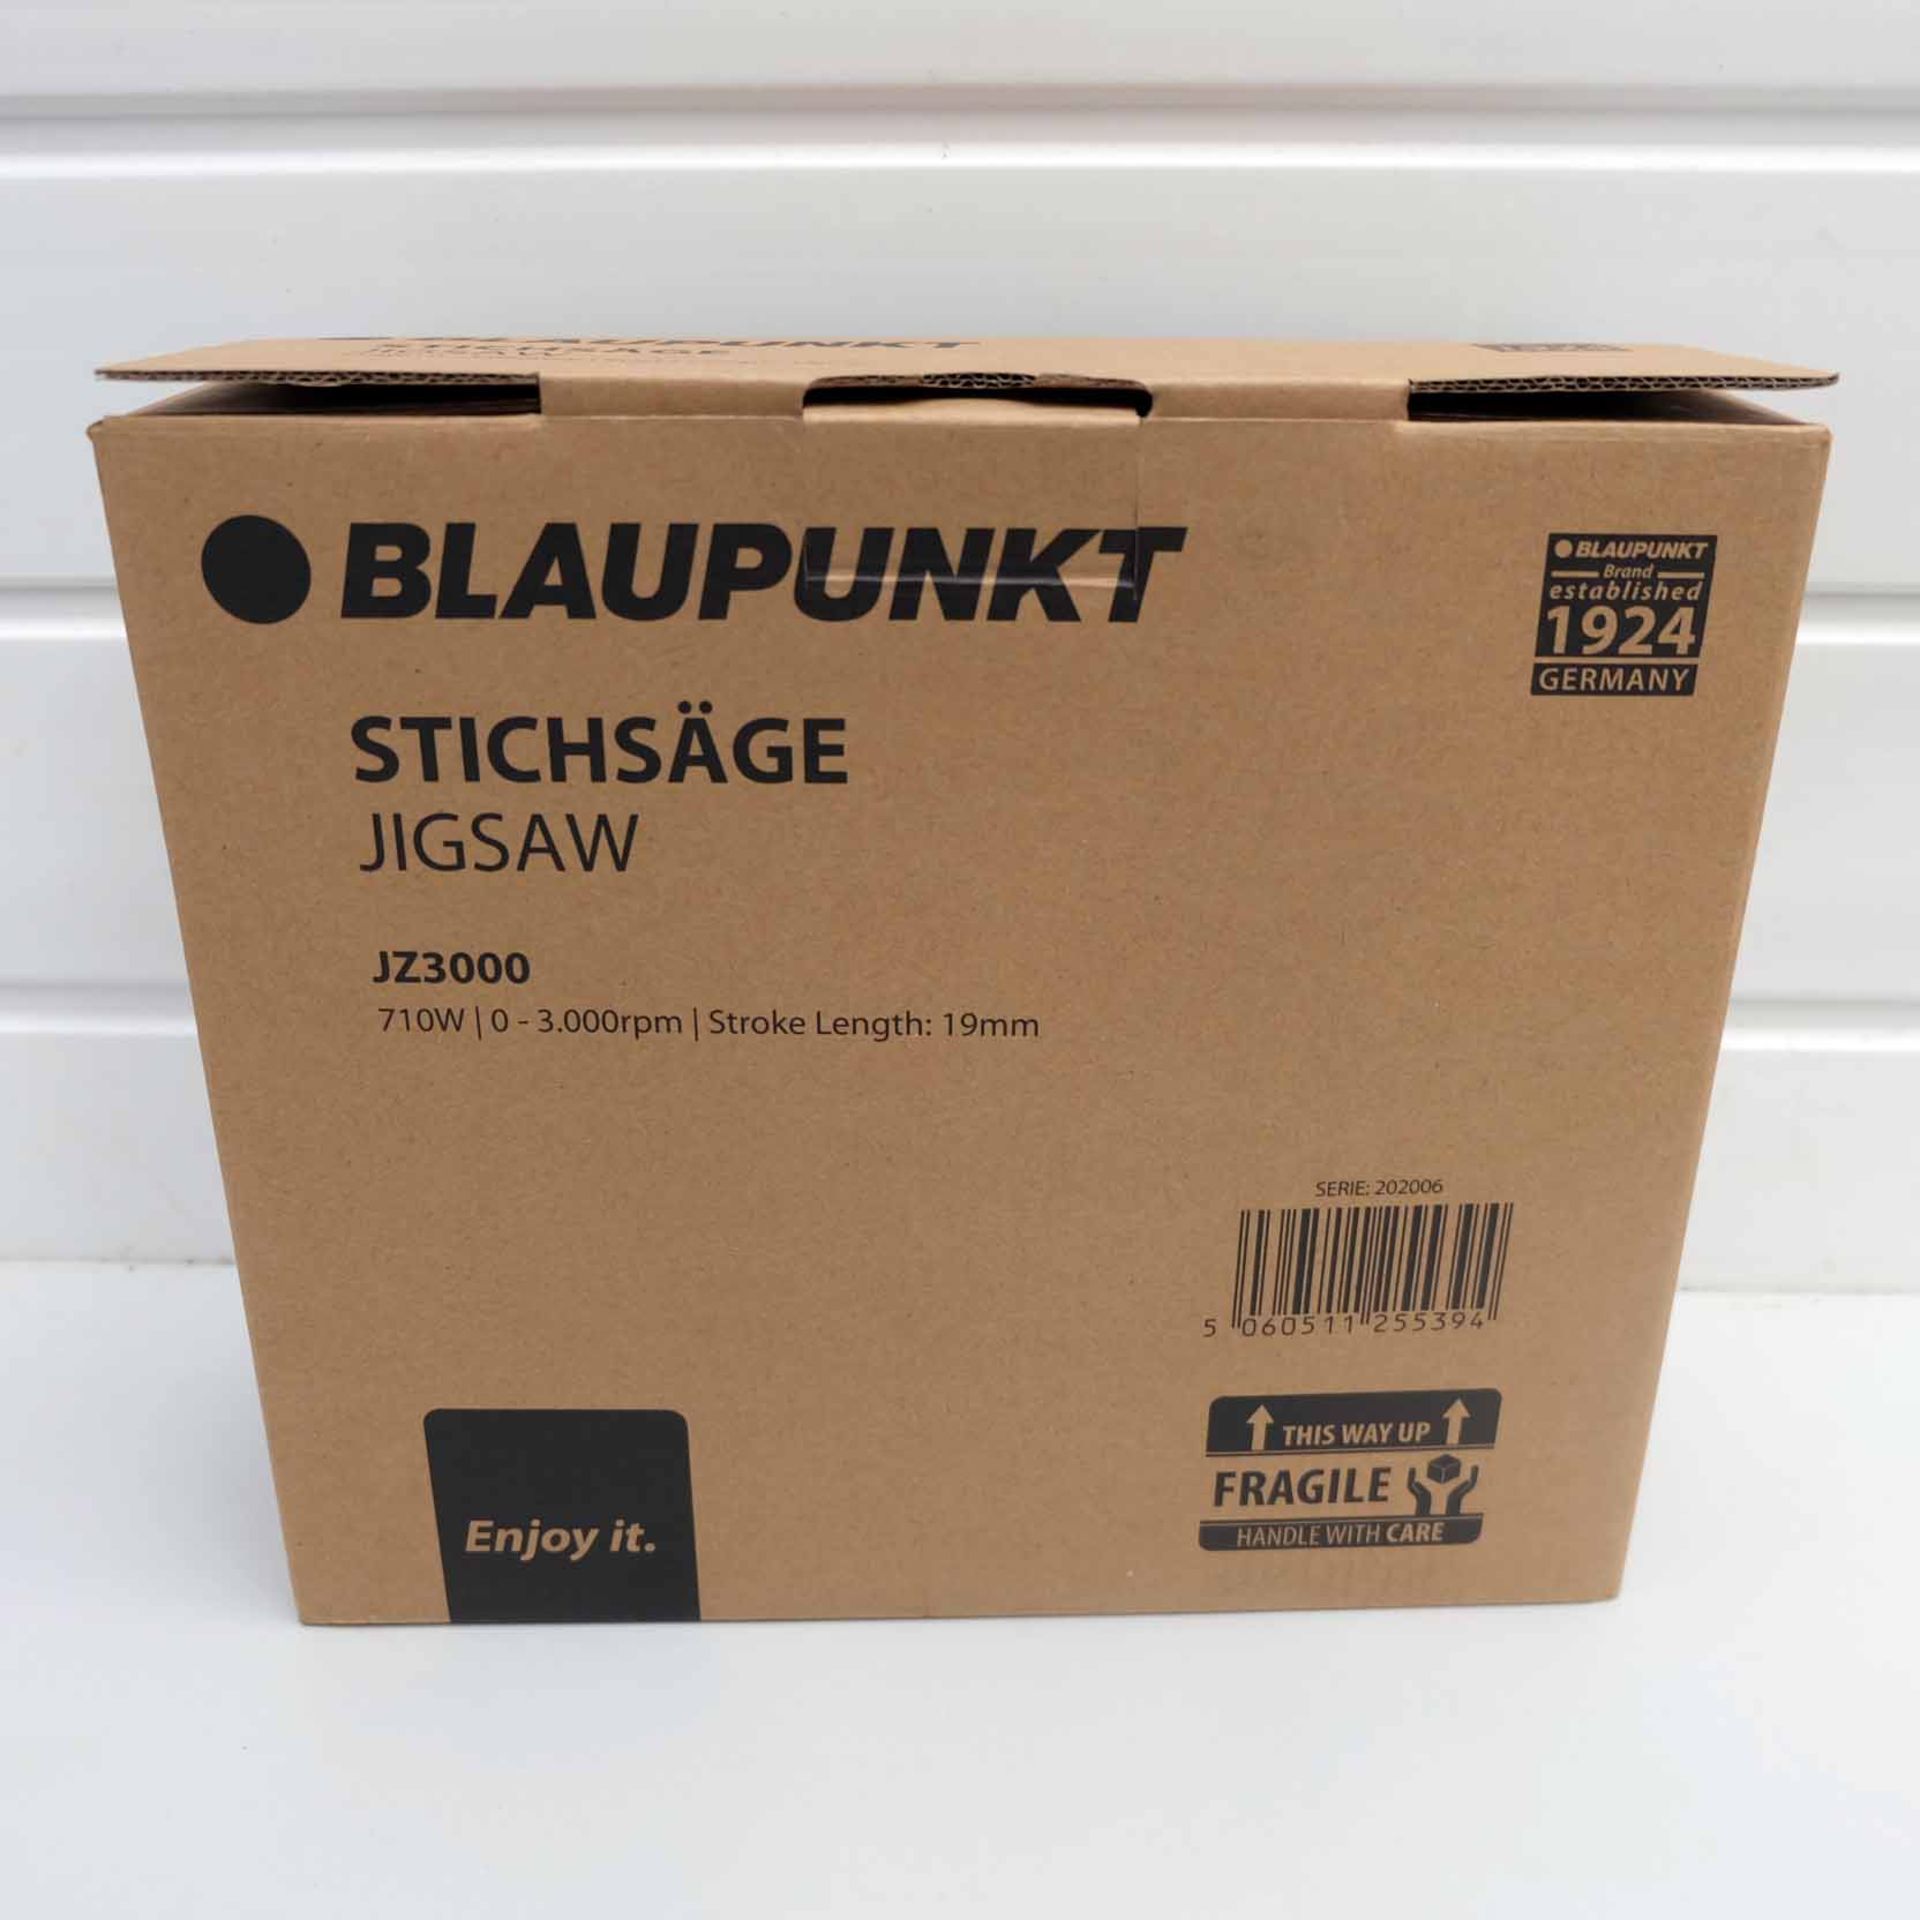 Blaupunkt STITAGE Jigsaw. Model JZ3000. 710W. 0-3000rpm. Stroke Length 19mm. - Image 9 of 9